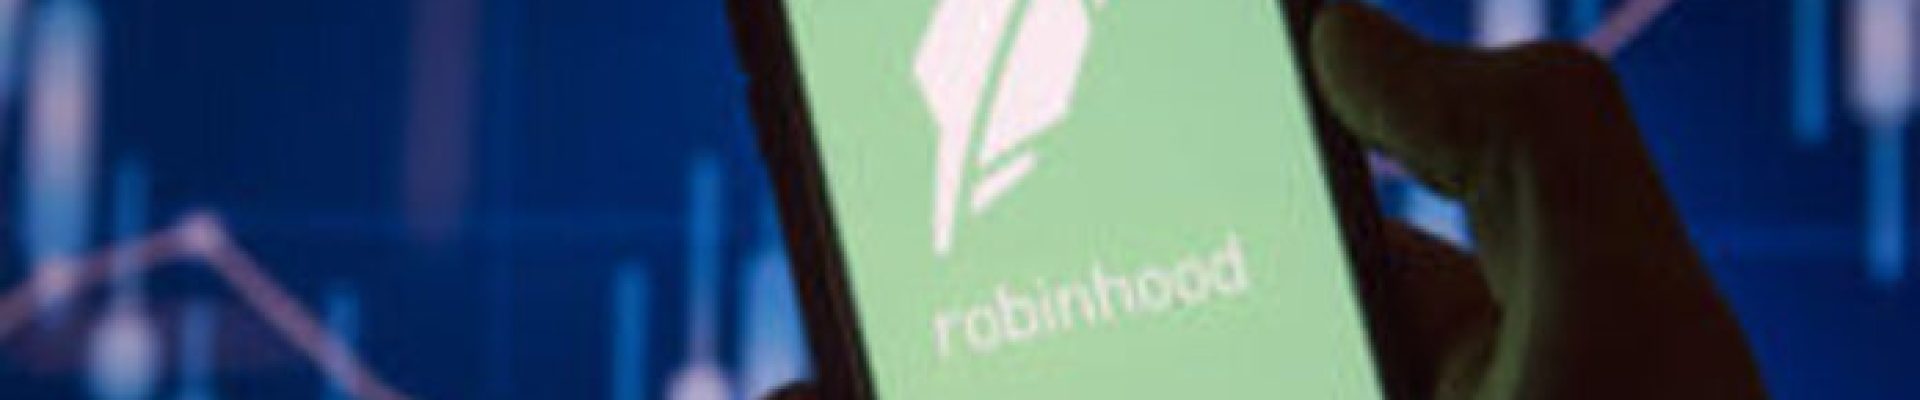 Robinhood-Stock-2-1.jpg